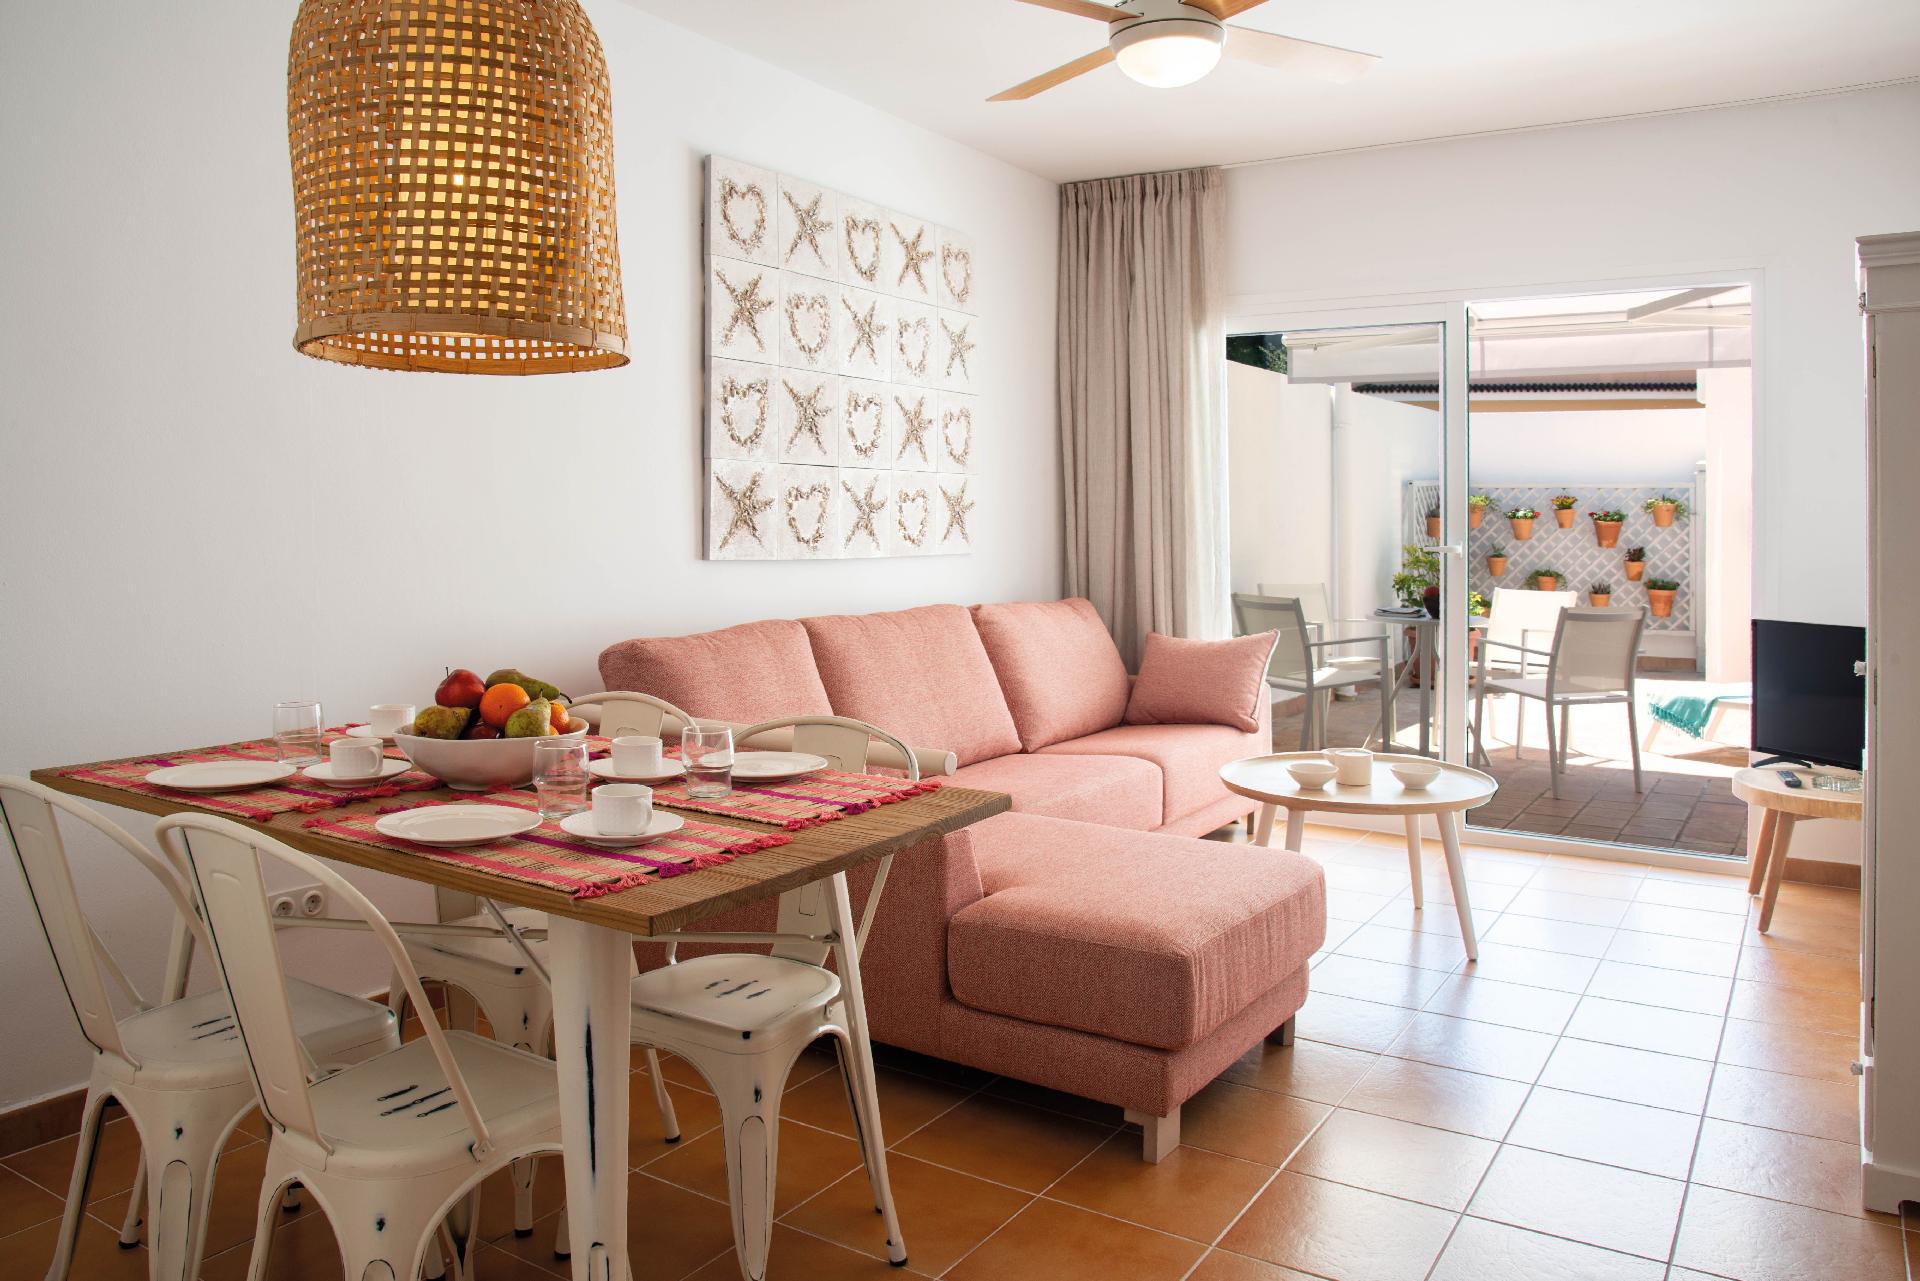 Appartement in Capdepera mit Sonniger Terrasse   Mallorca